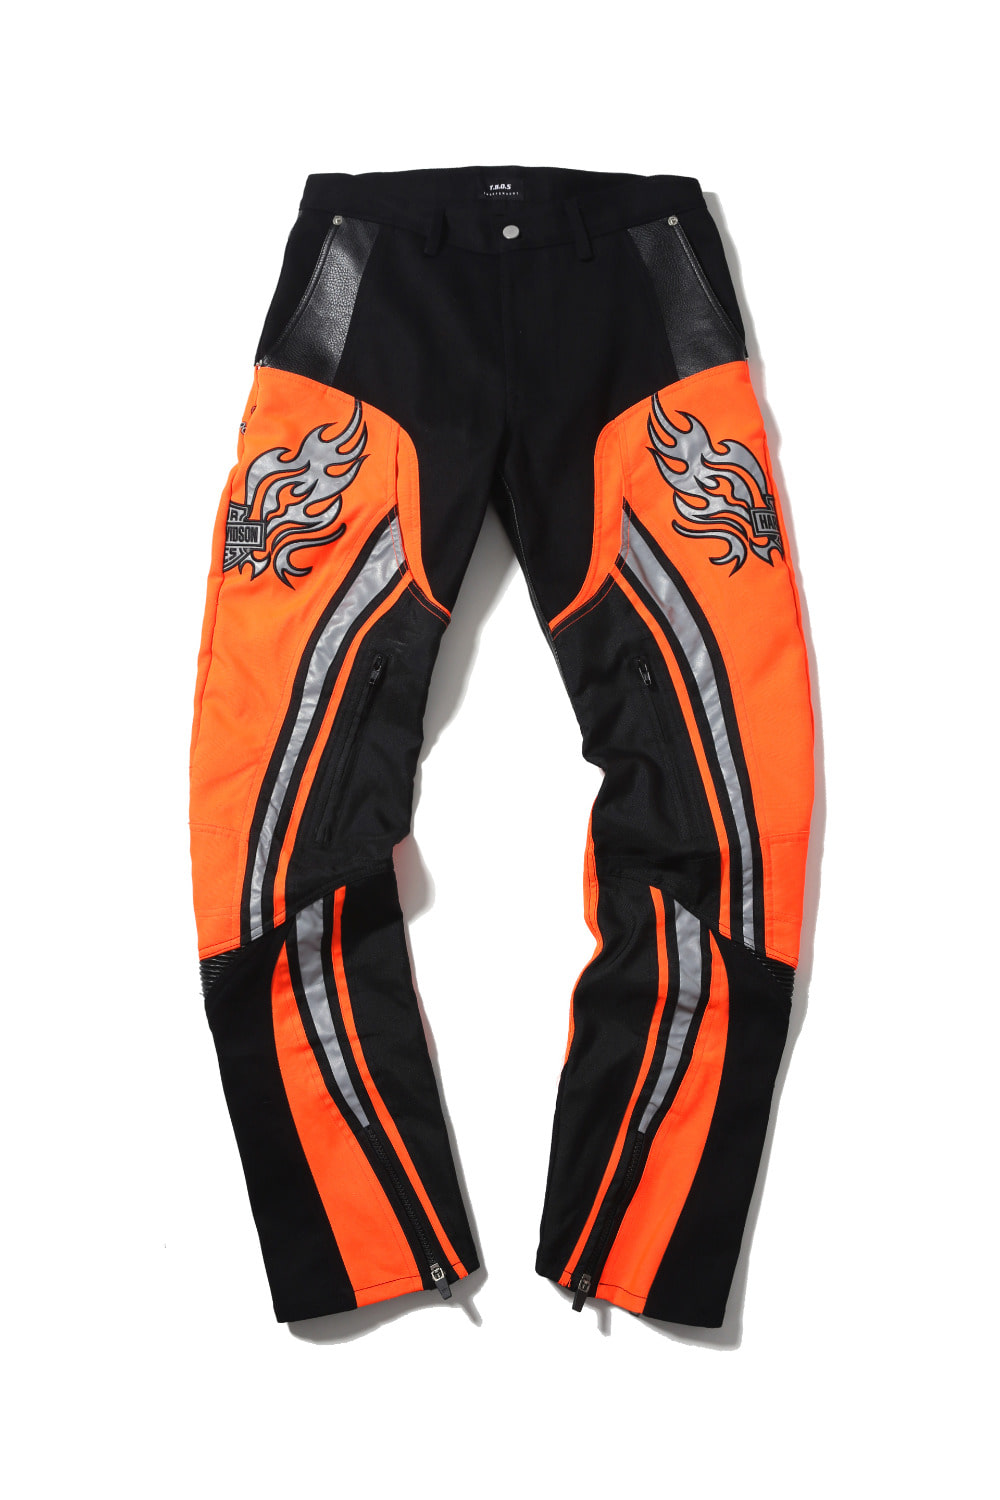 Harley Davidson detail pants